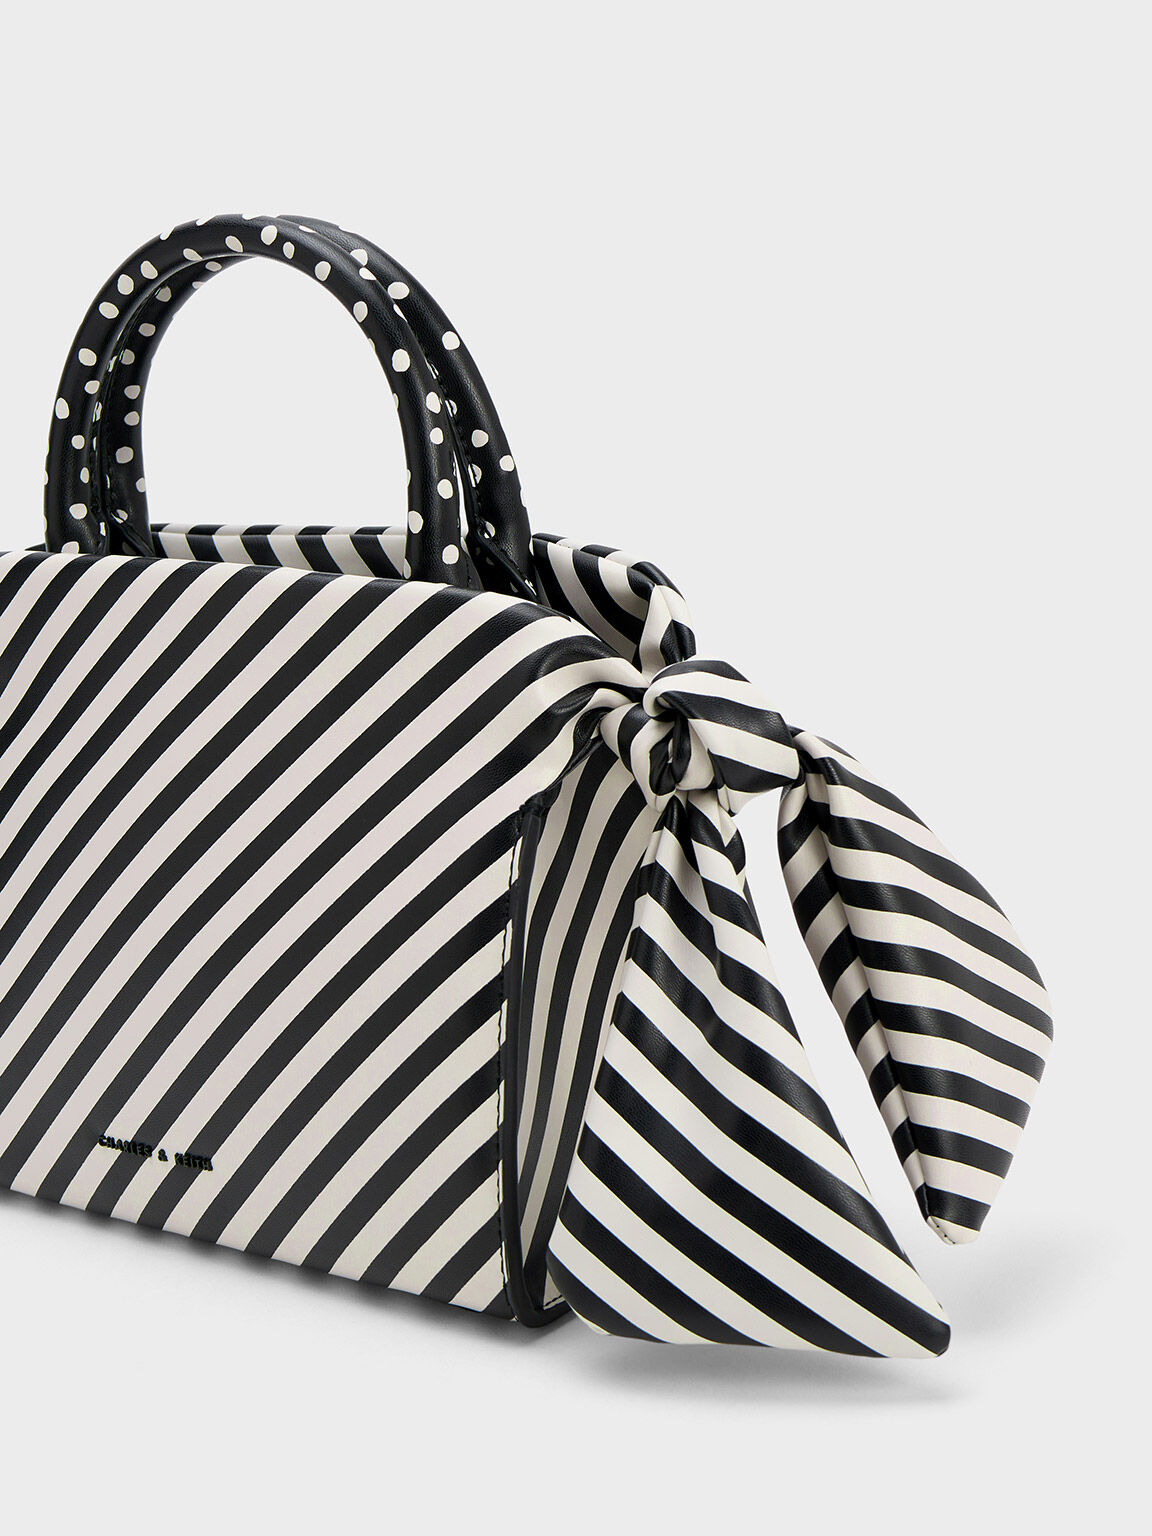 Striped Clutch Bag Striped Bag Gothic Clutch Bag Black & White Striped Bag  Witchy Clutch Purse Vegan Leather Clutch Bag 9.5x6 - Etsy